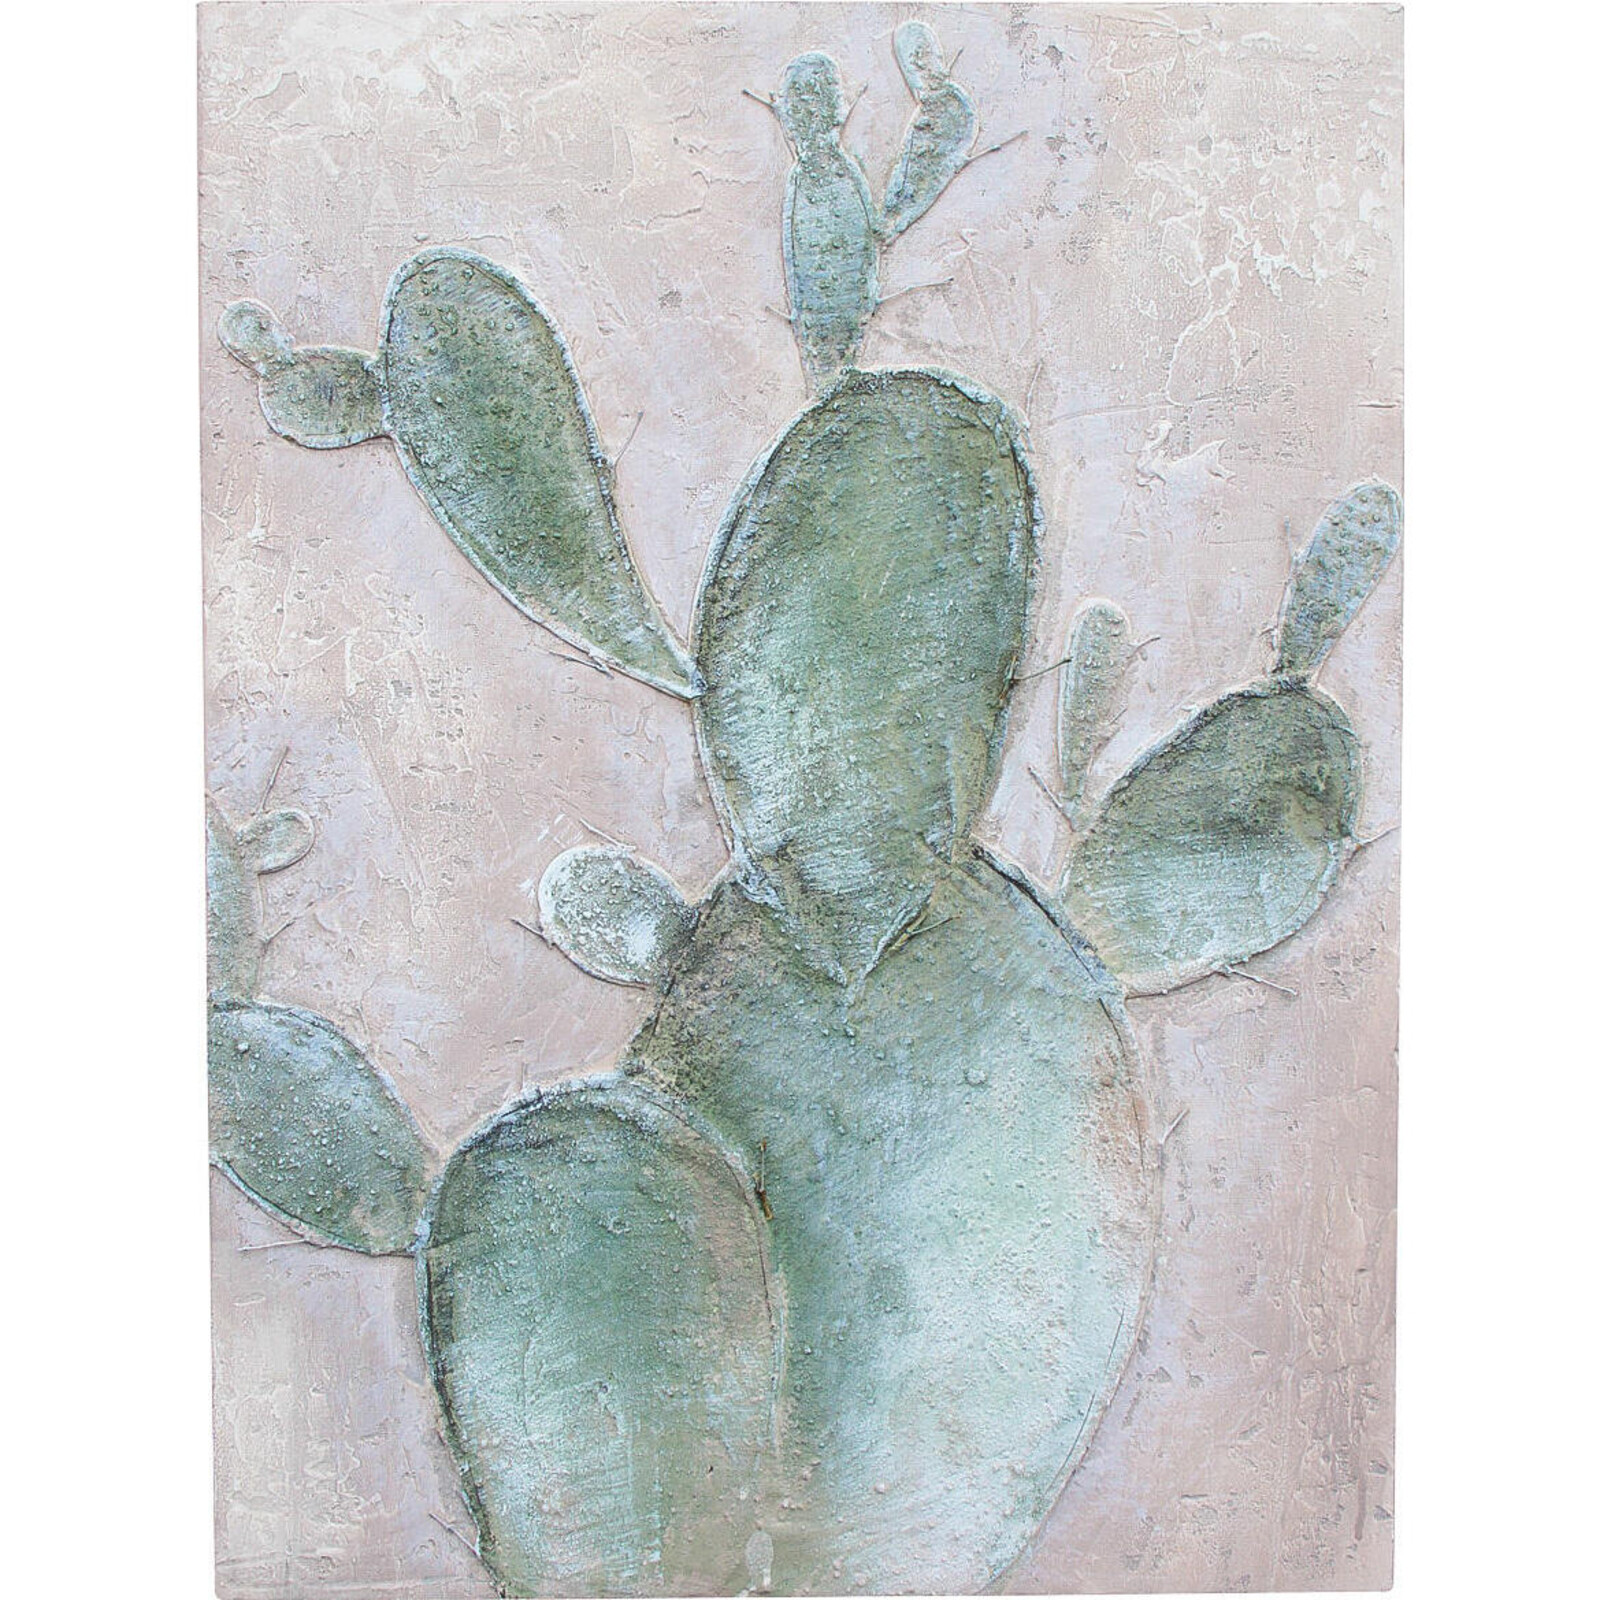 Oil Paint Textured Cactus